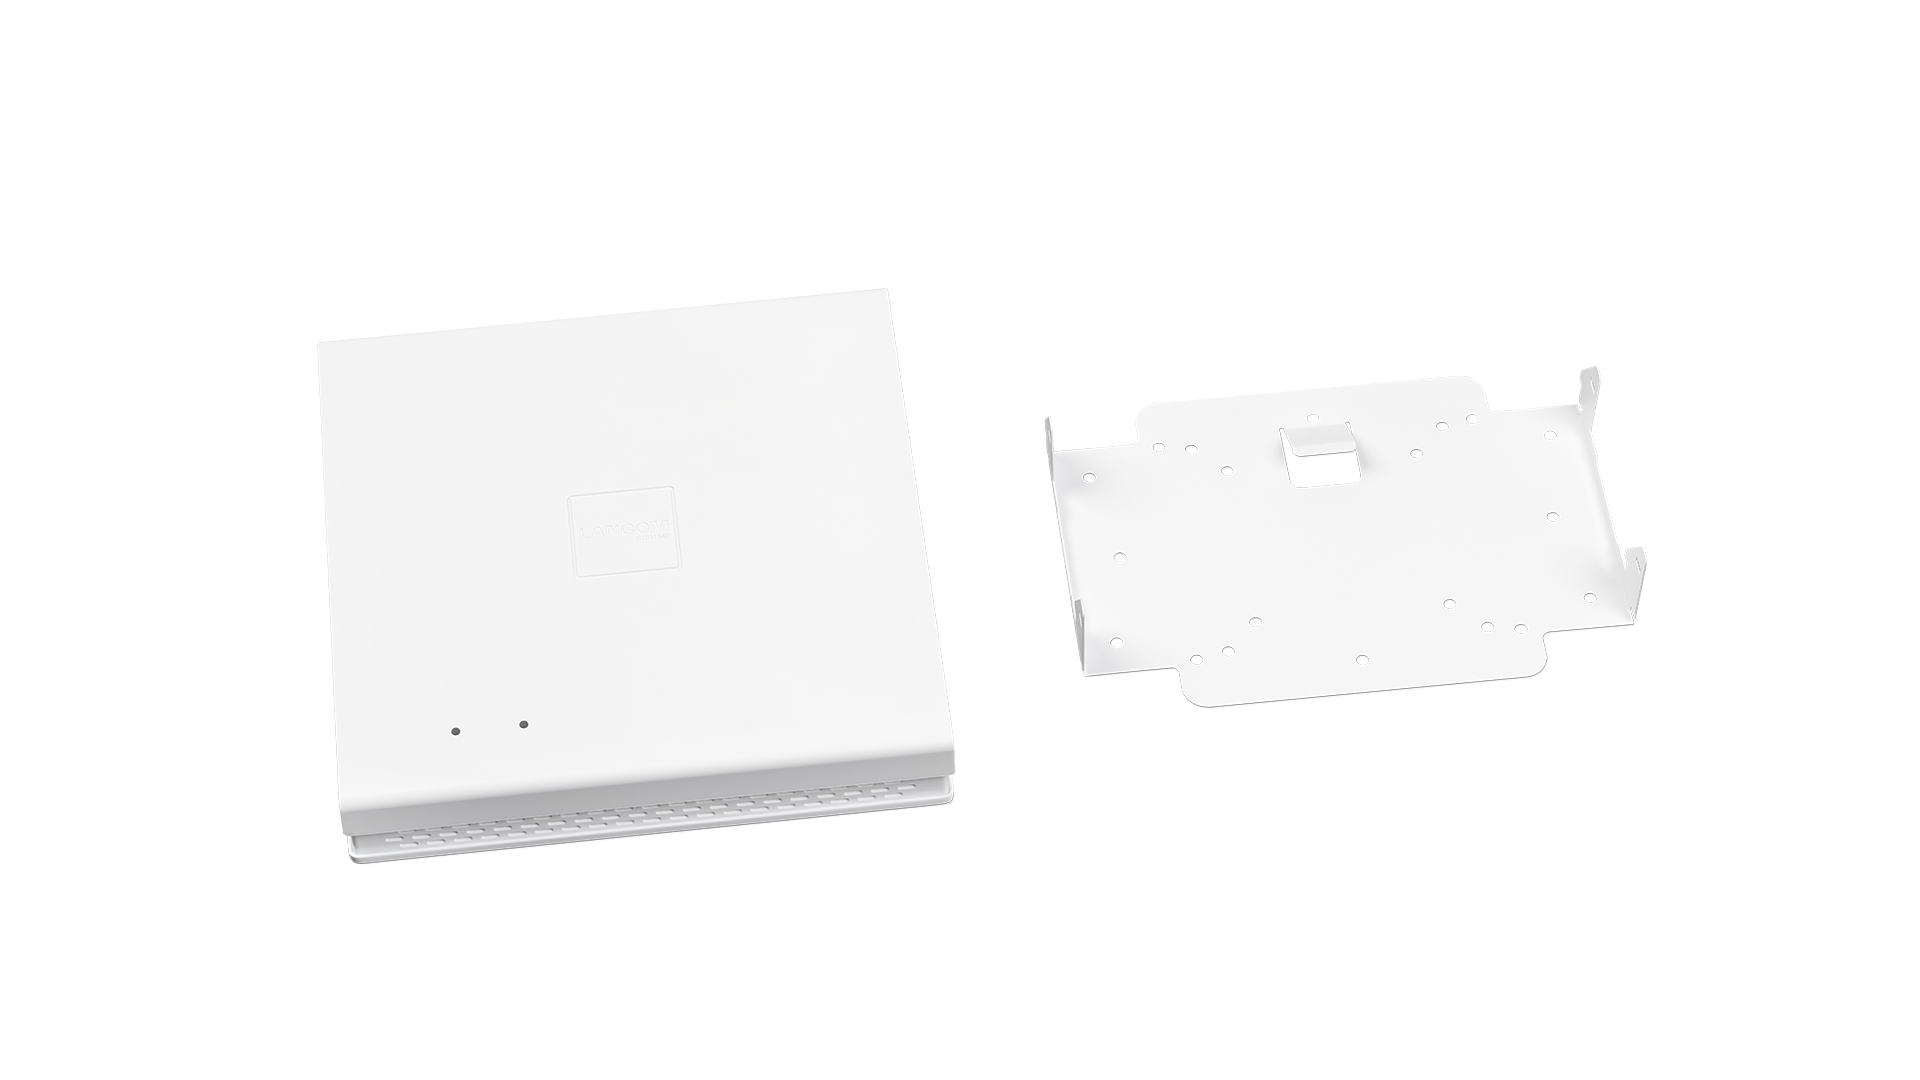 Produktfoto des LANCOM LX-6500 und des Wall Mounts